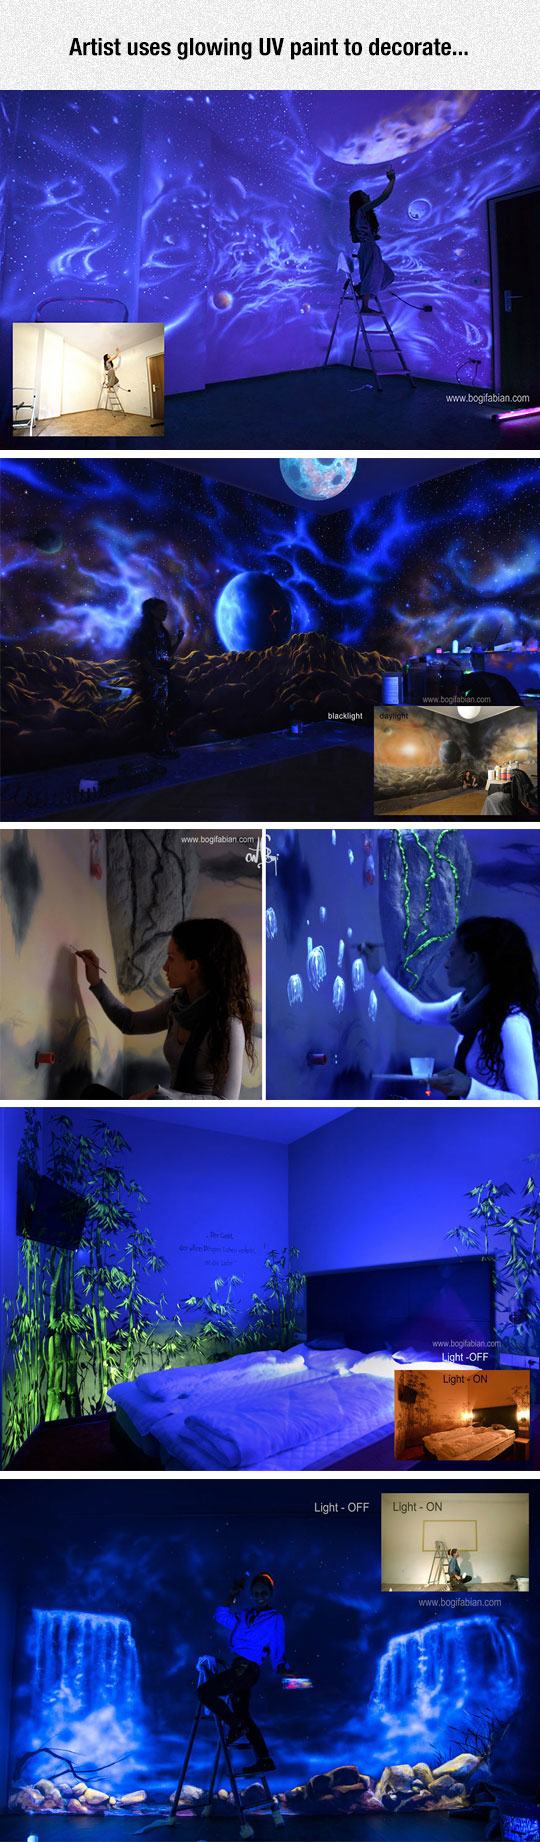 Mural - Artist uses glowing Uv paint to decorate... blacklight Daylight com Light Off LightOn Light Off Light On